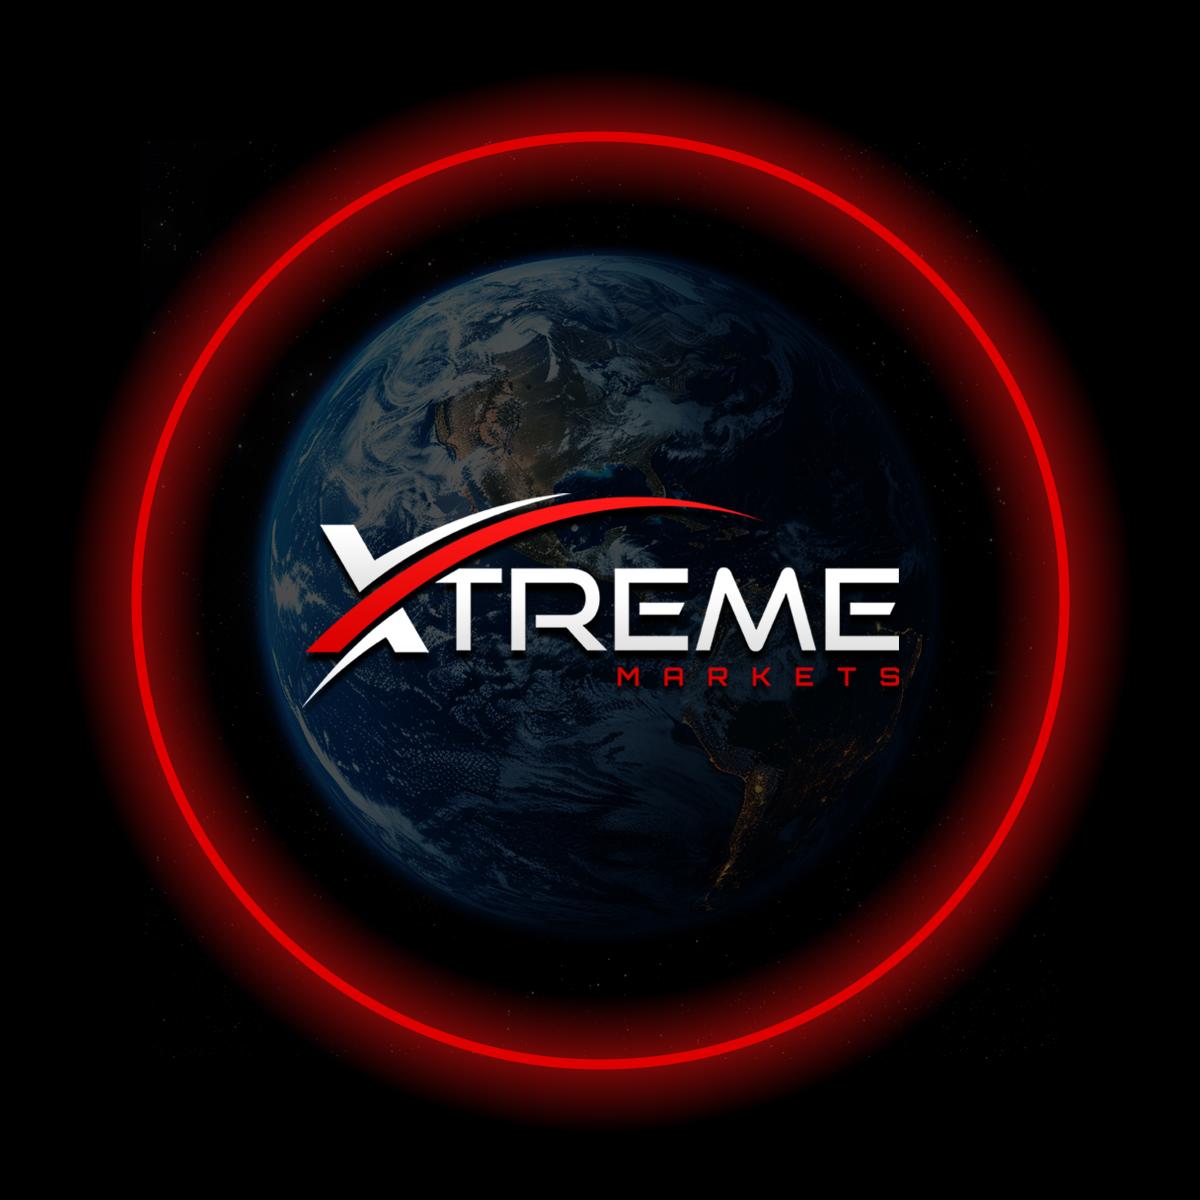 Xtreme Markets